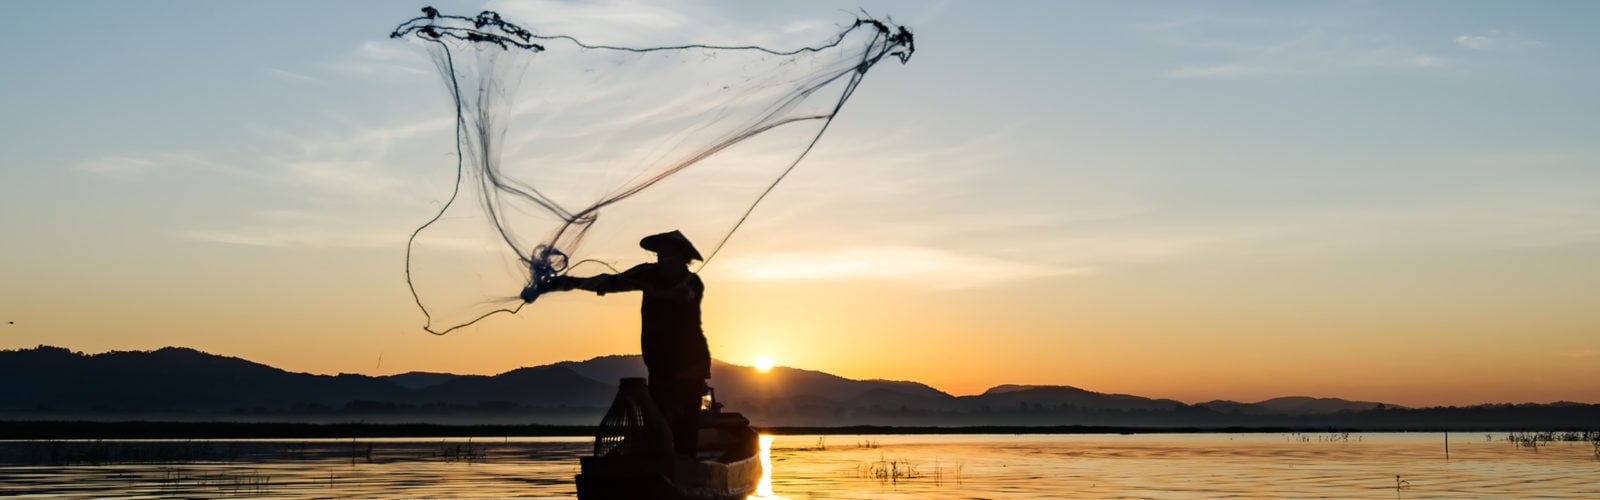 Fisherman casting net, Inle Lake, Myanmar